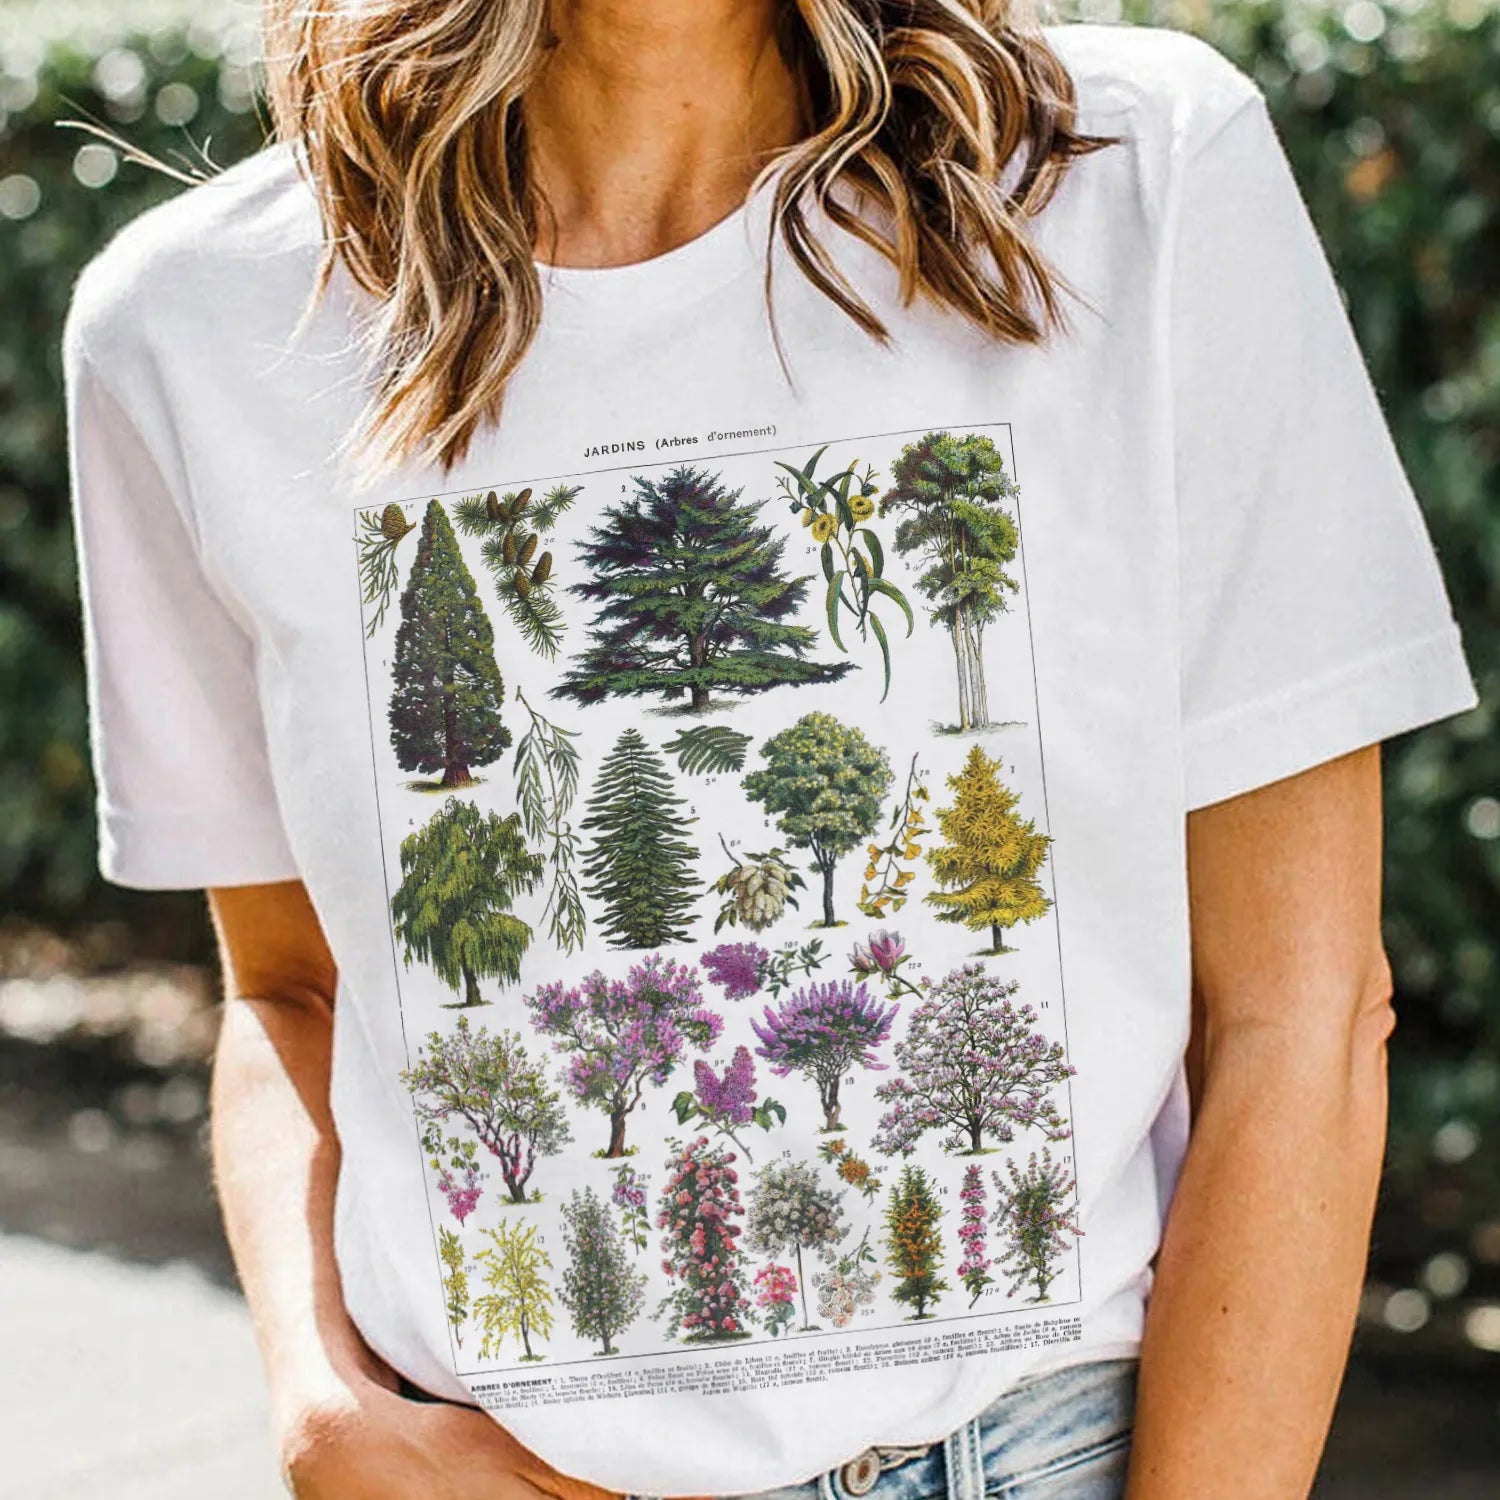 Sunfiz Hjn Dandelion Vintage Botanical Tshirt, Hiking Tshirt, Botanical Print Shirt, Dandelion Shirt, Vintage Tee